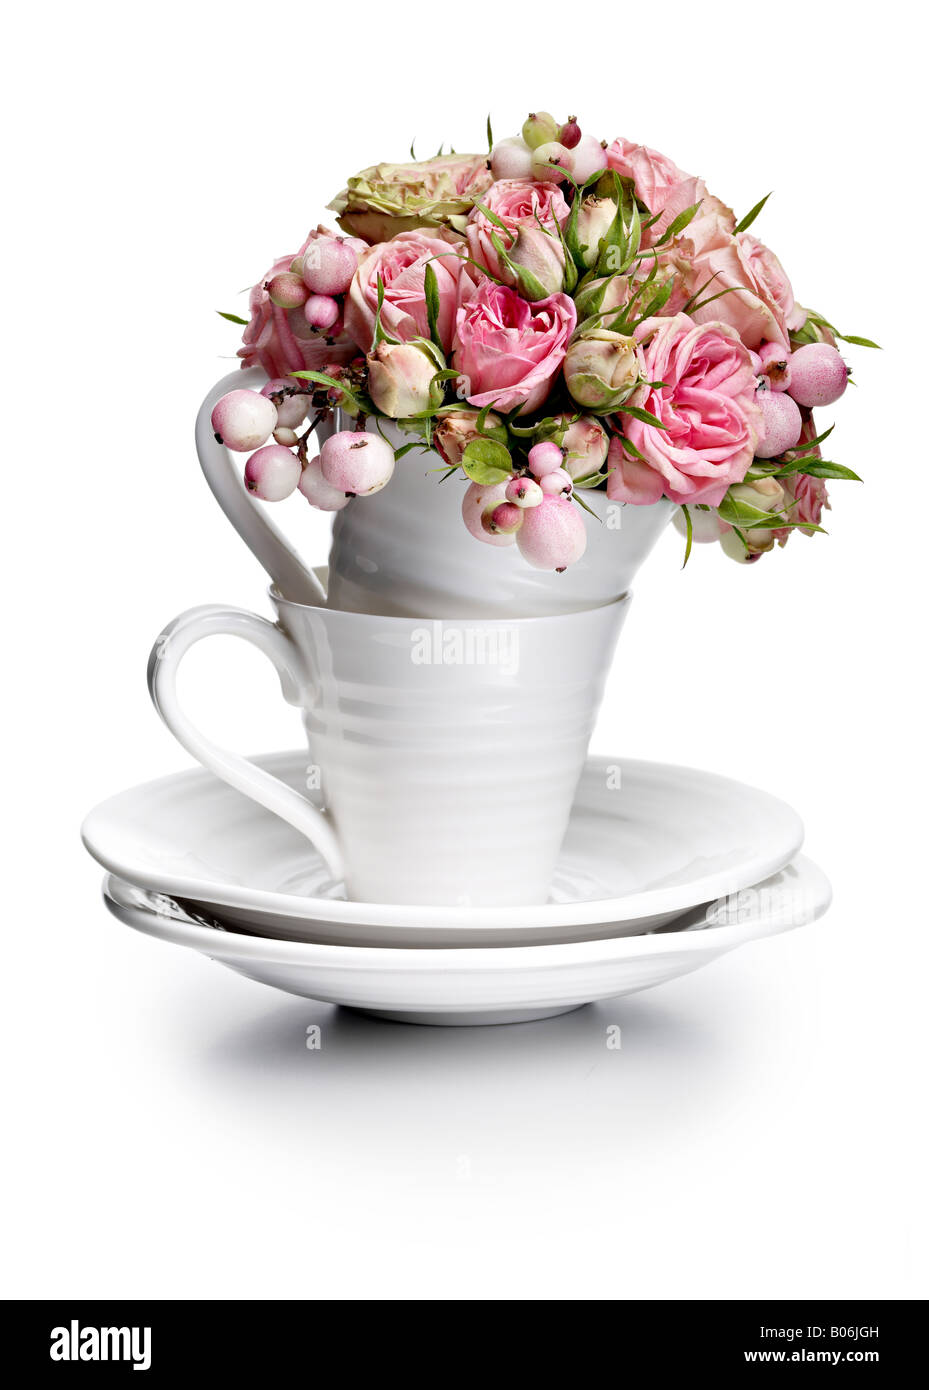 Rosas de té en tazas de té arreglo floral Fotografía de stock - Alamy